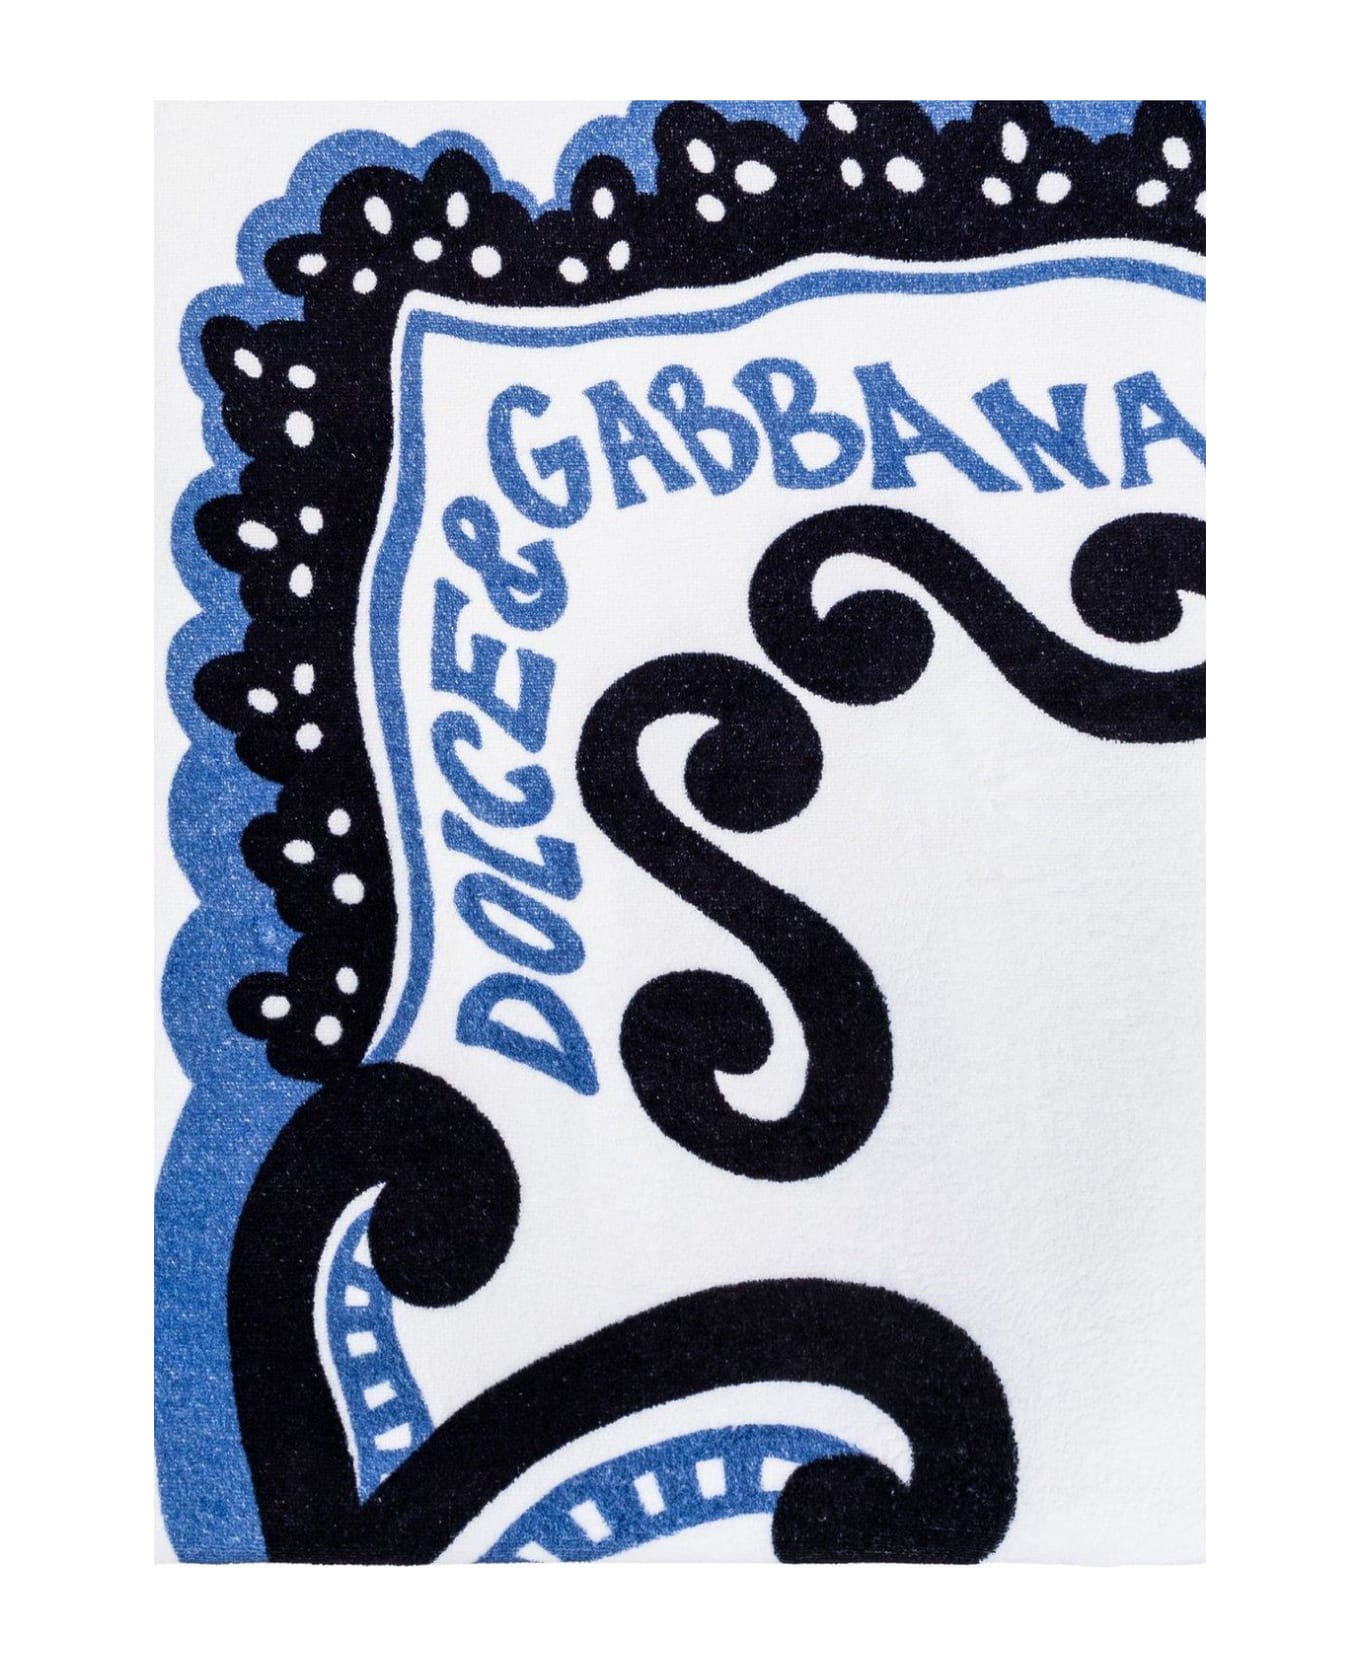 Dolce & Gabbana Beach Towel - Azzurro multicolor タオル